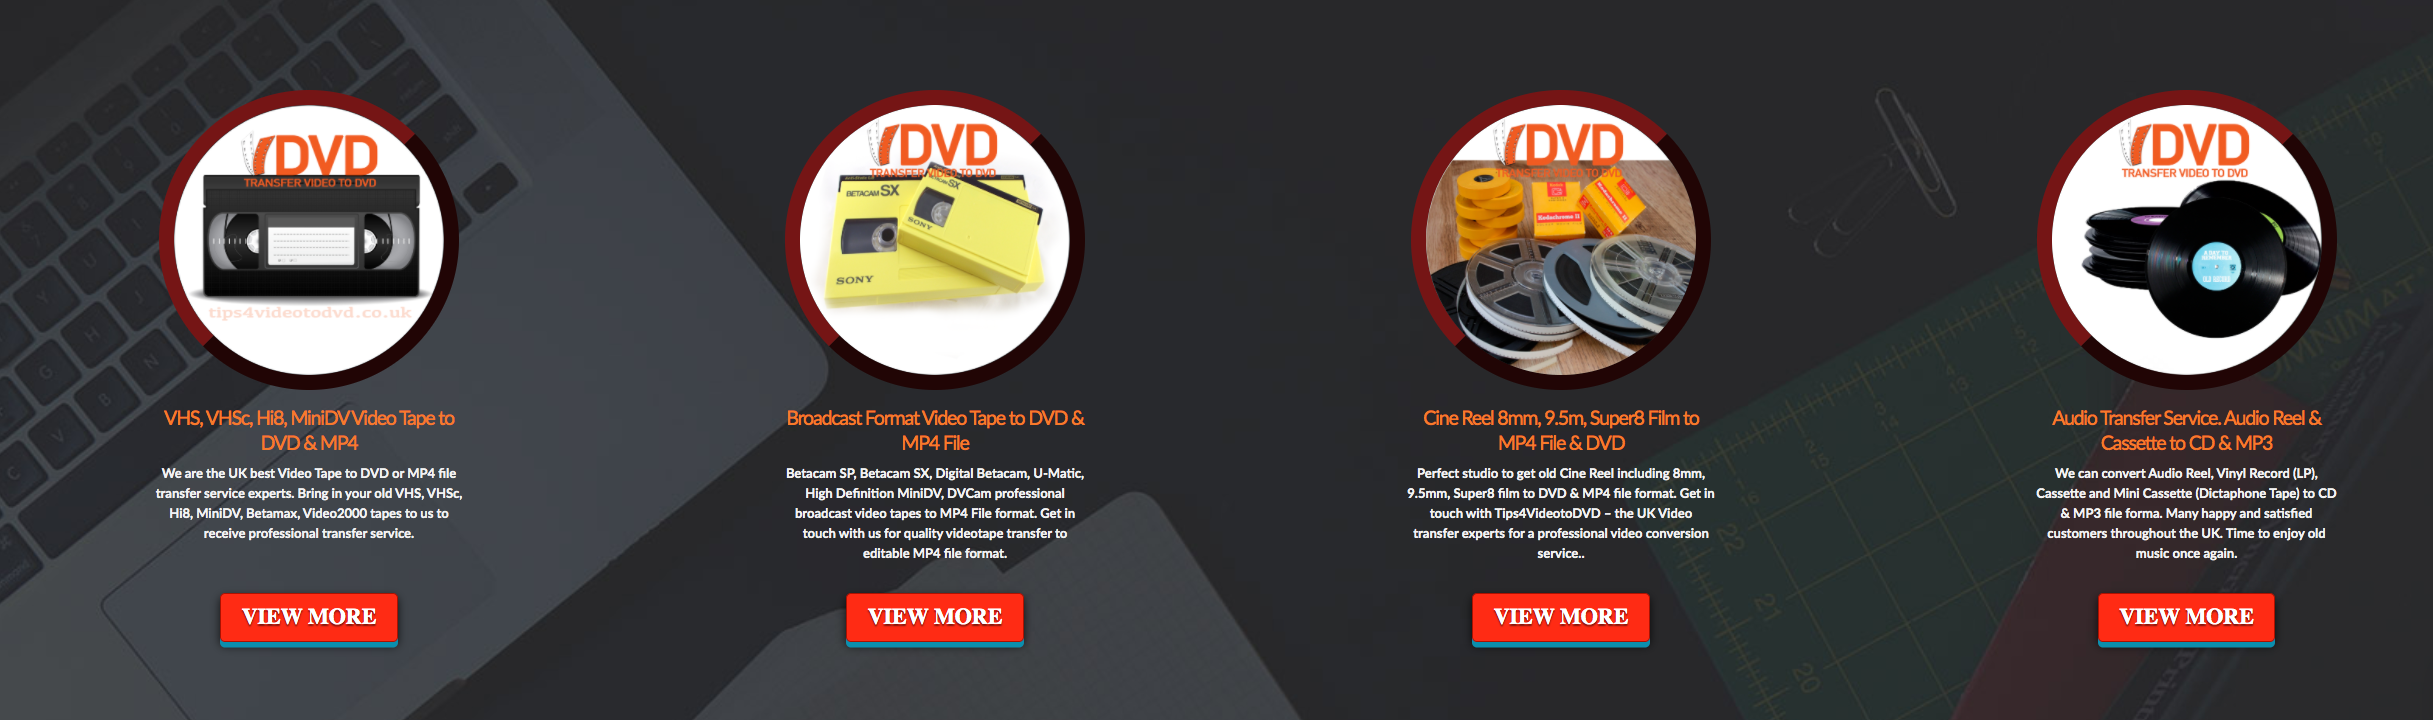 VHS Video to DVD Digital Transfer Service